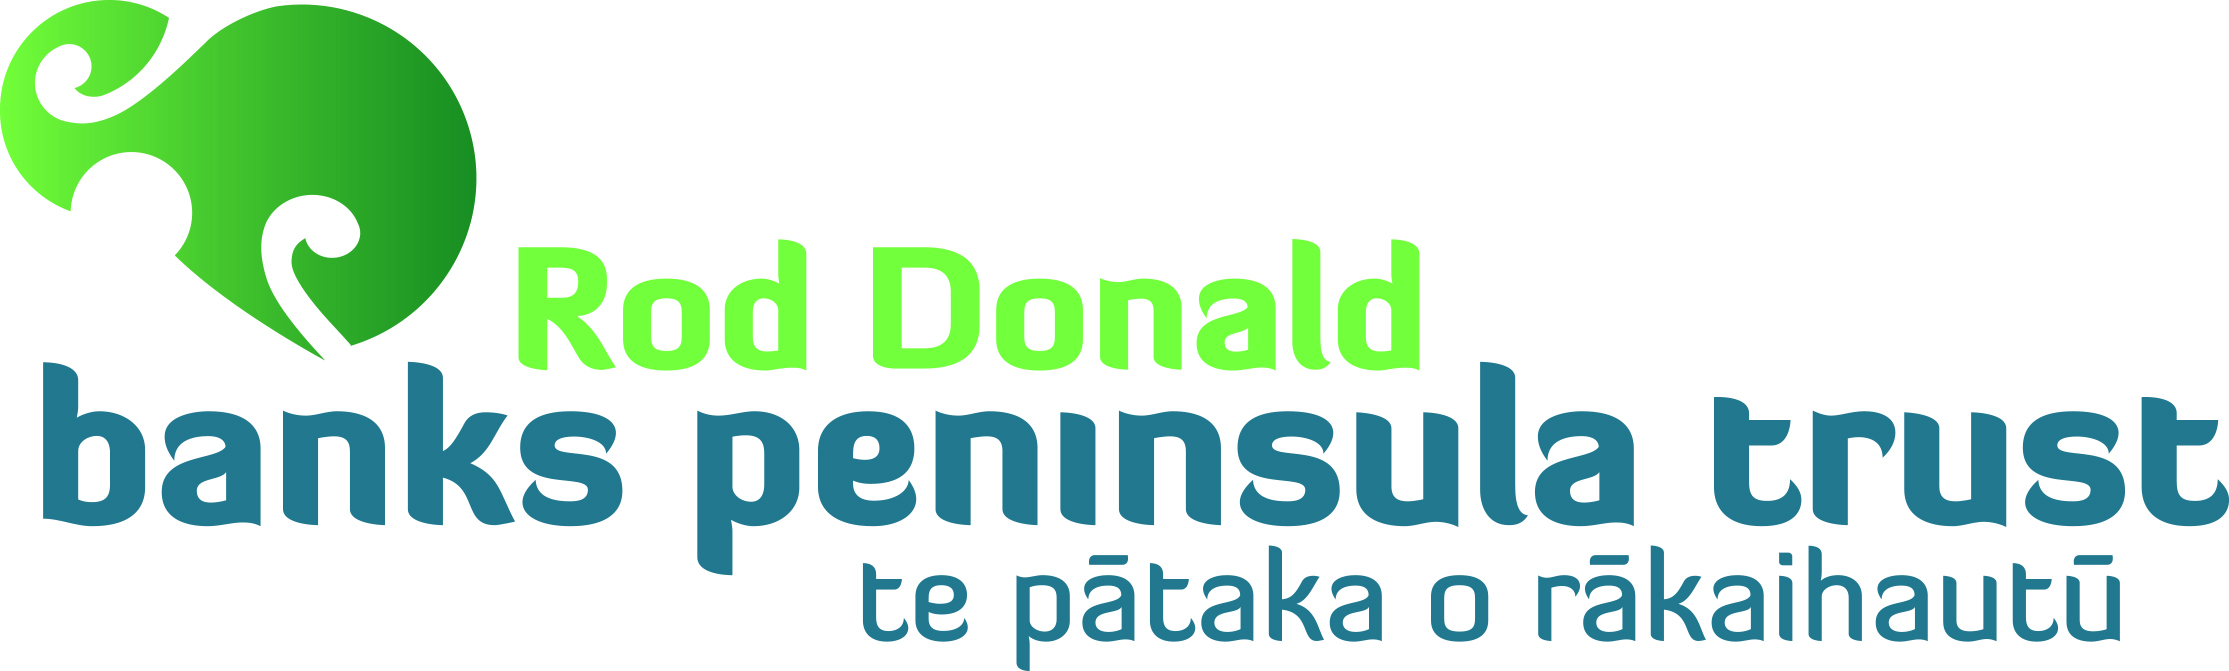 Rod Donald Banks Peninsula Trust